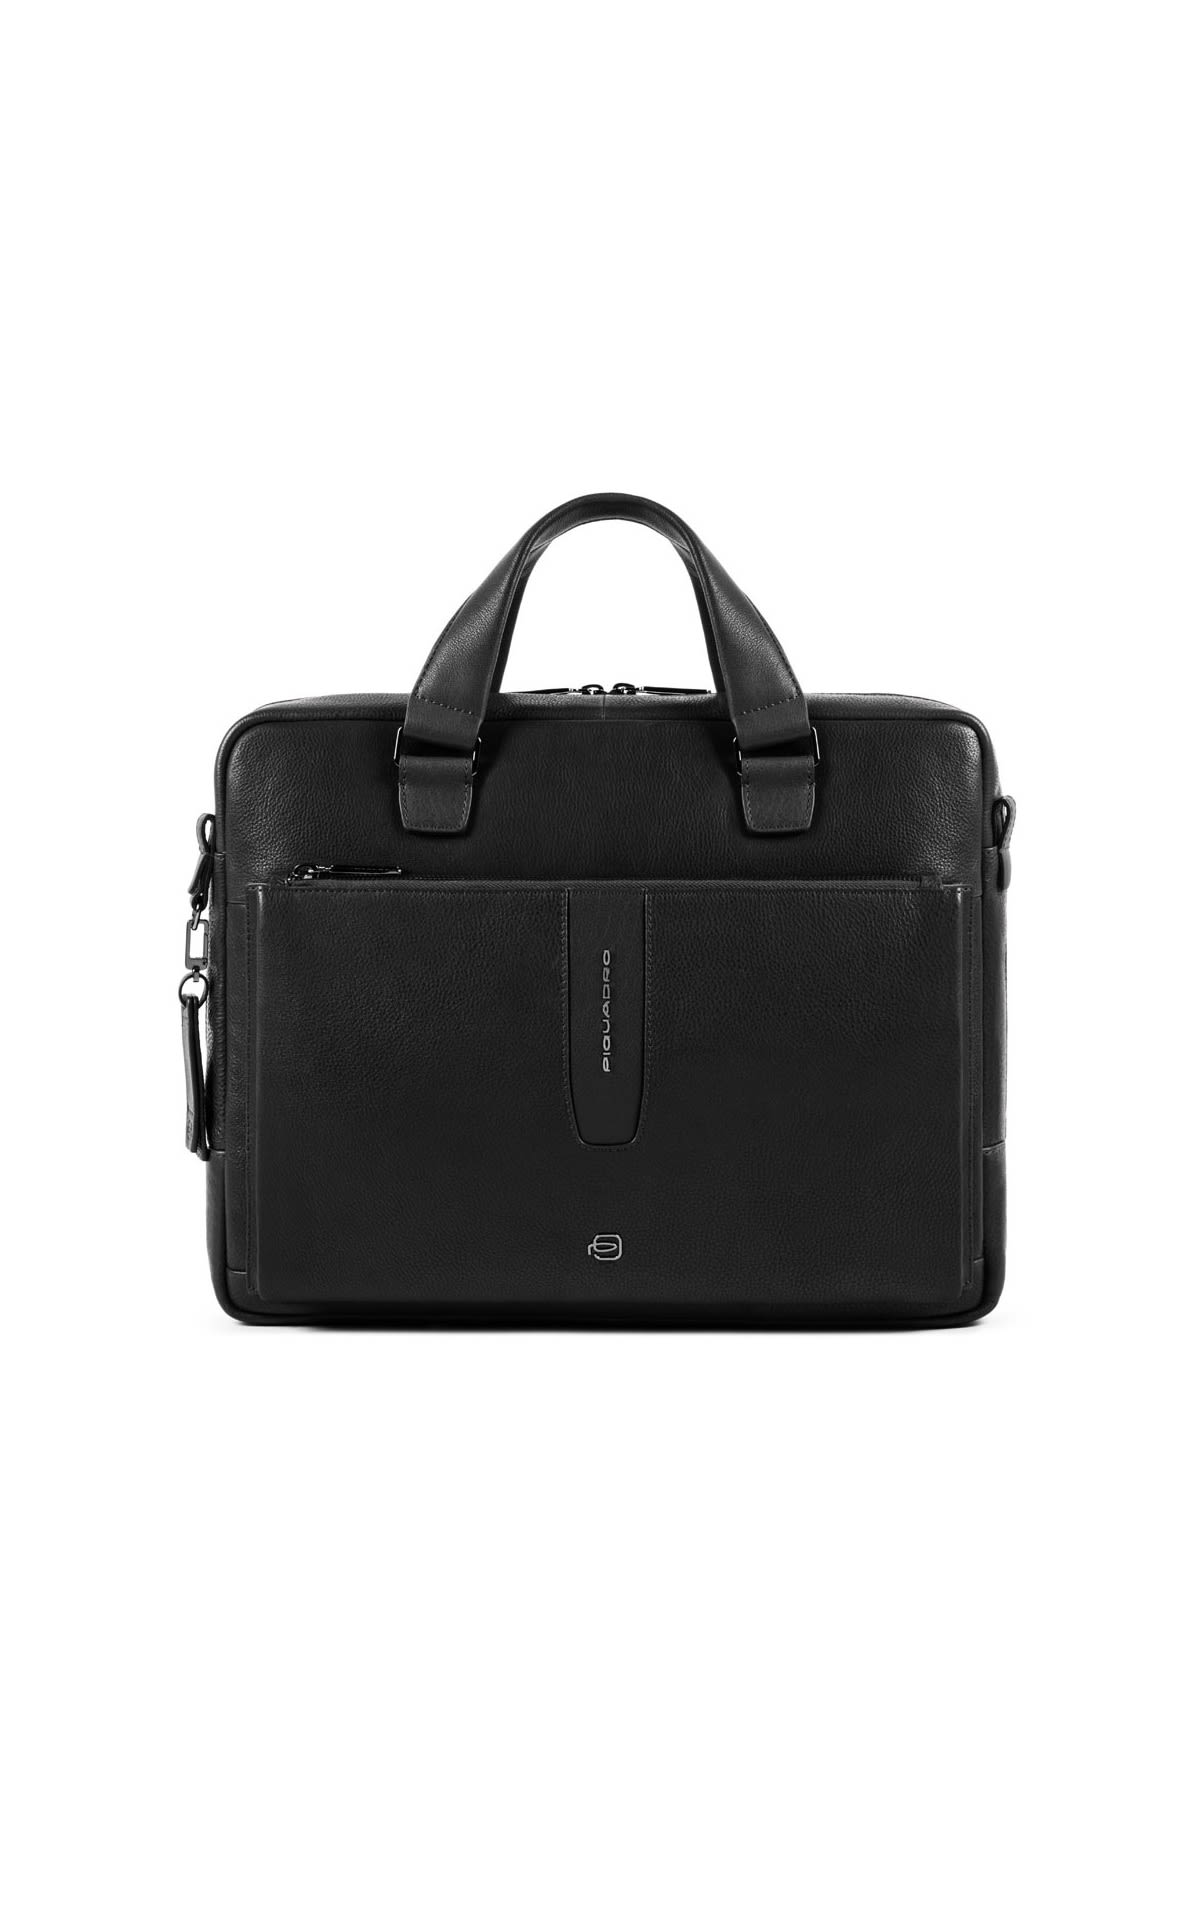 Leather black briefcase Piquadro